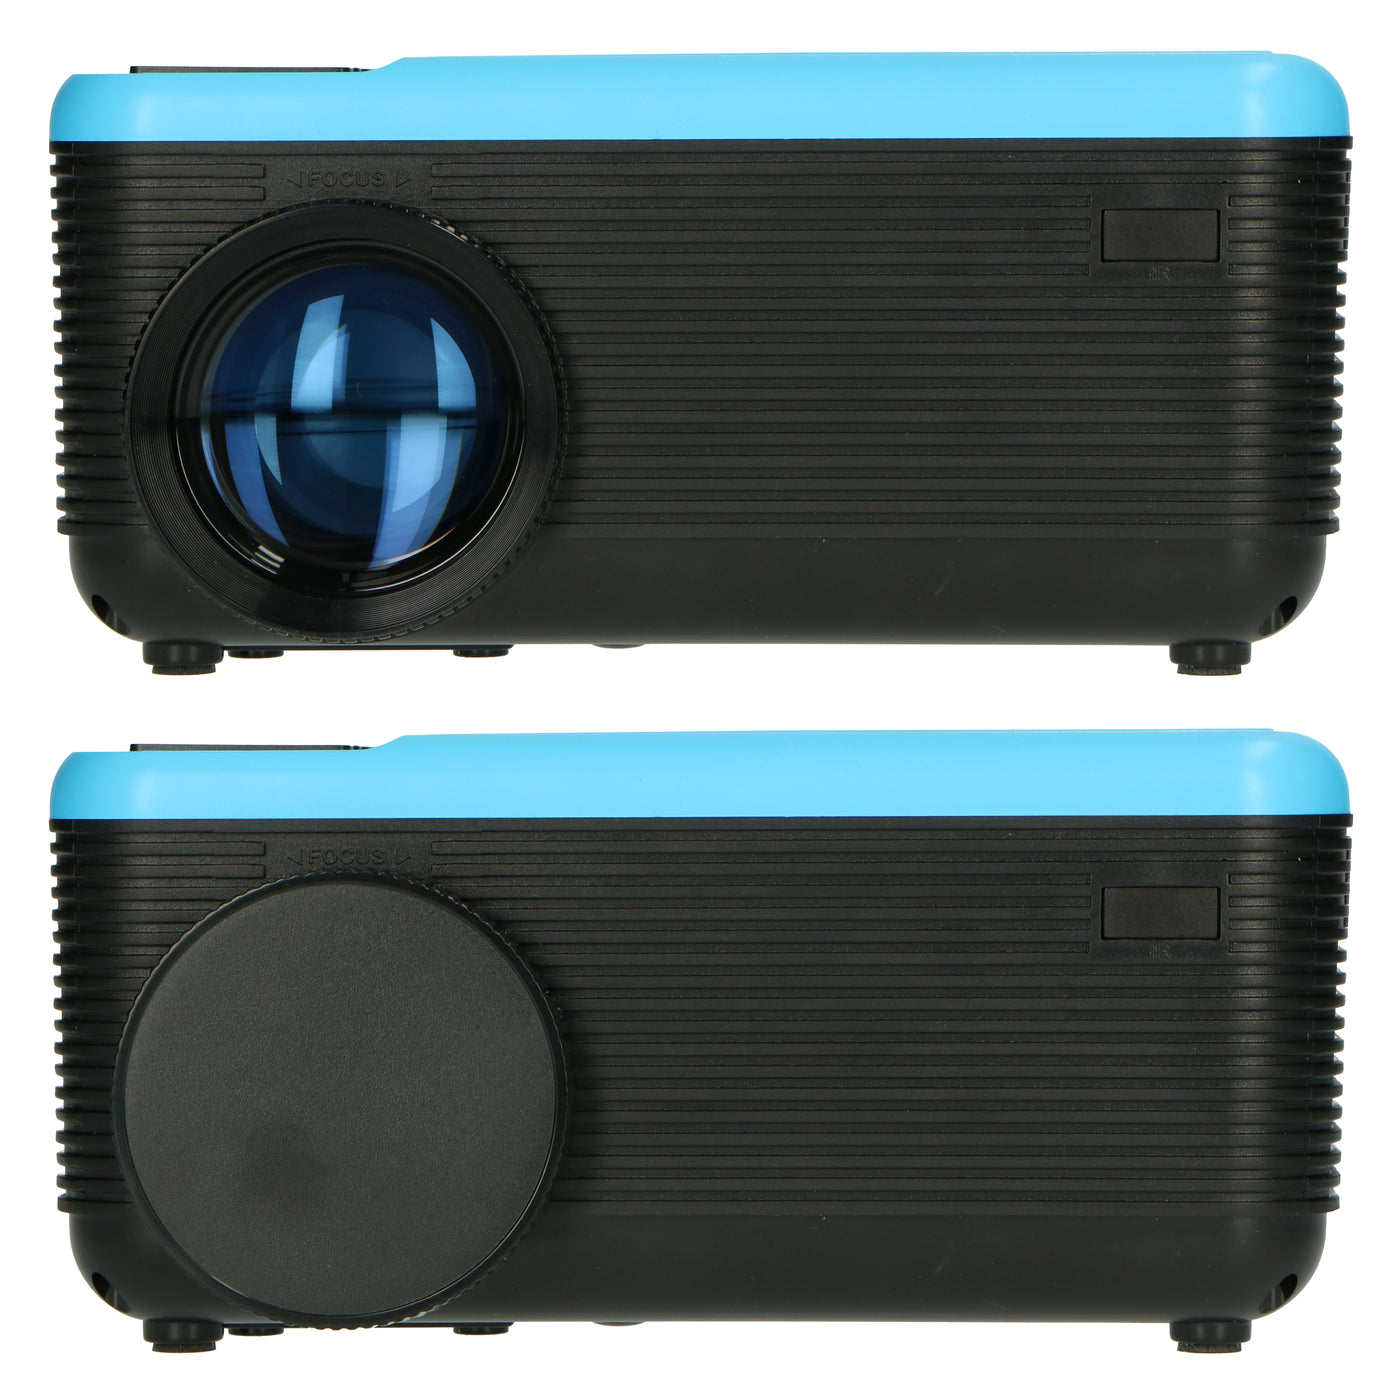 LENCO LPJ-500BU - LCD Projector met DVD speler en Bluetooth® - Blauw